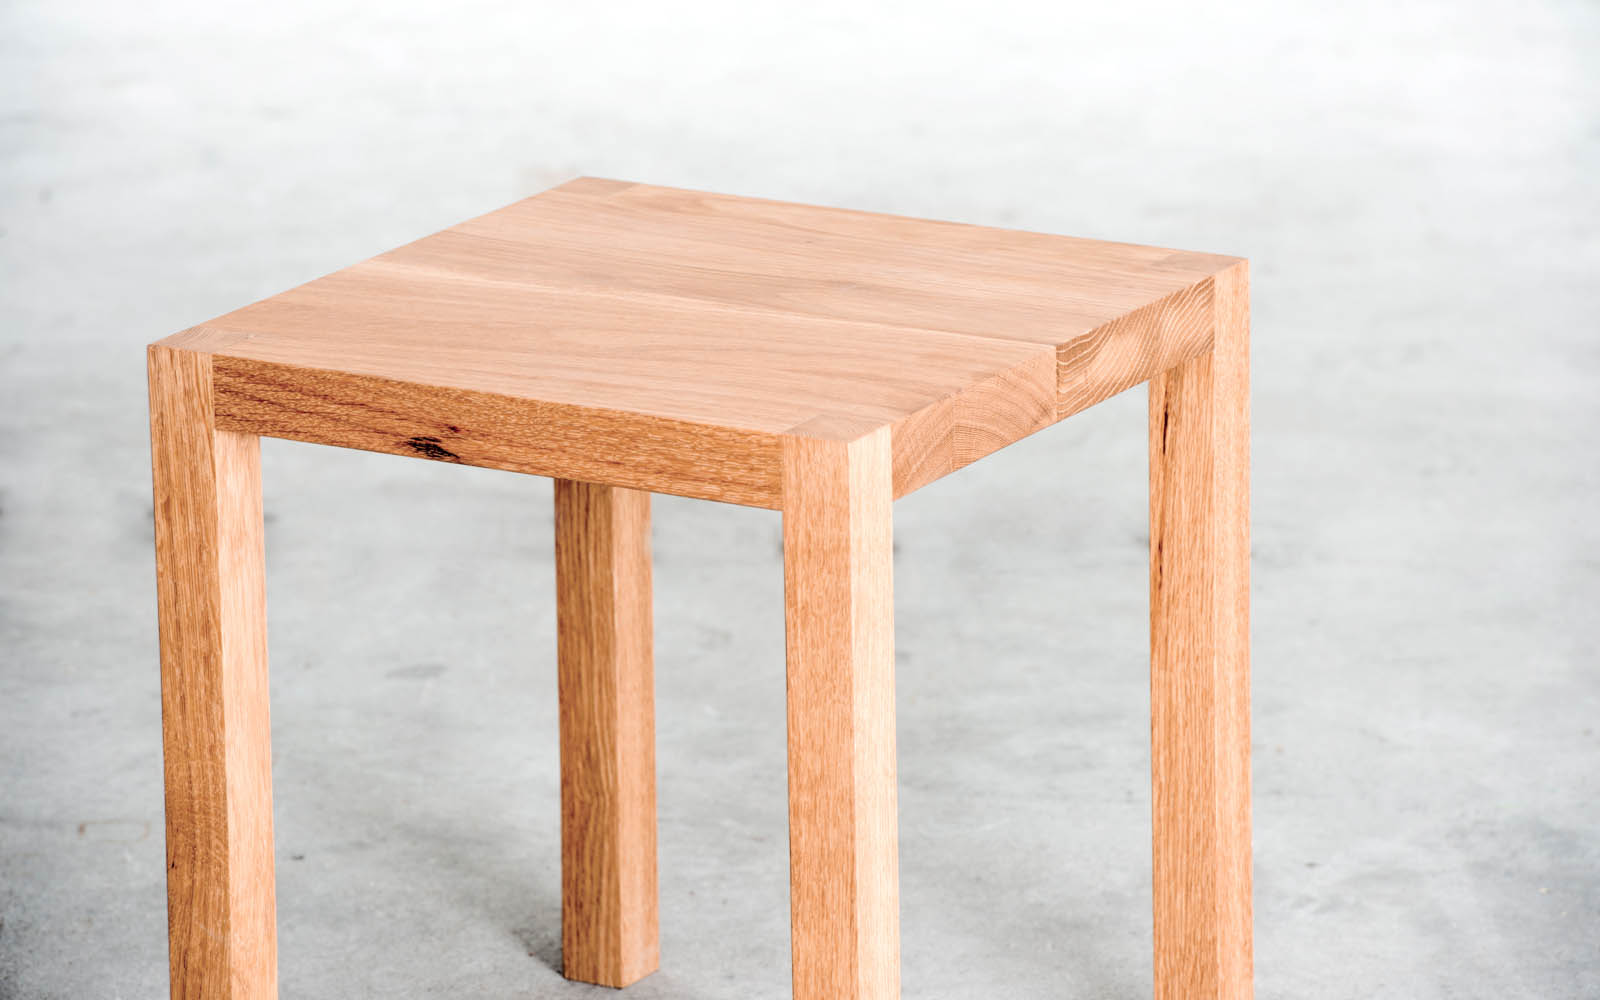 QoWood stool